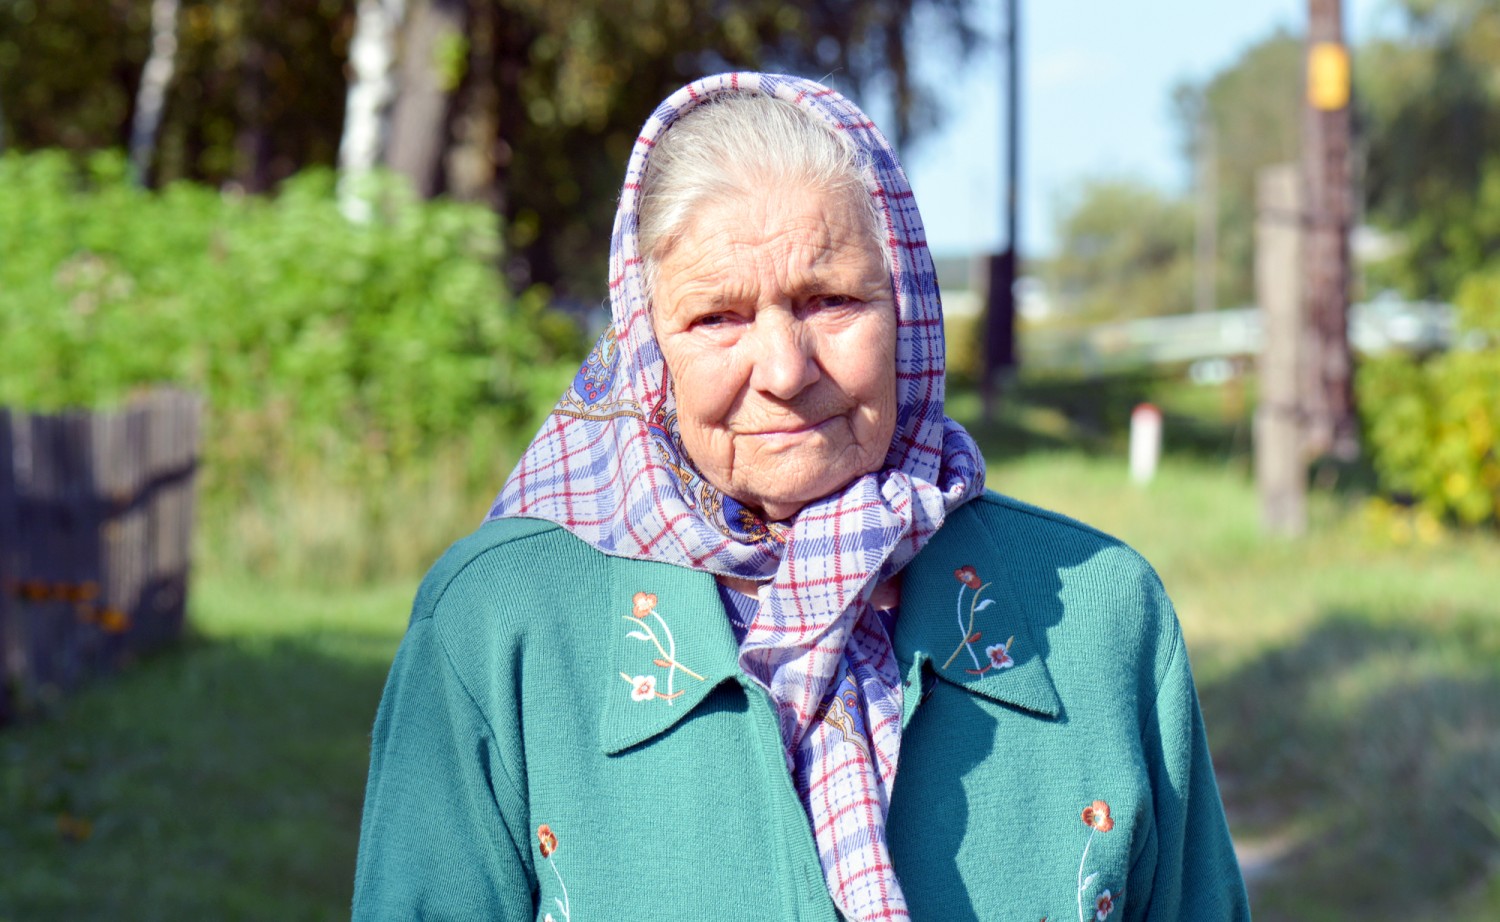 Нейлон бабушка. Пожилая женщина в платке. Бабушка в платочке. Деревенская бабушка. Обычная бабушка.